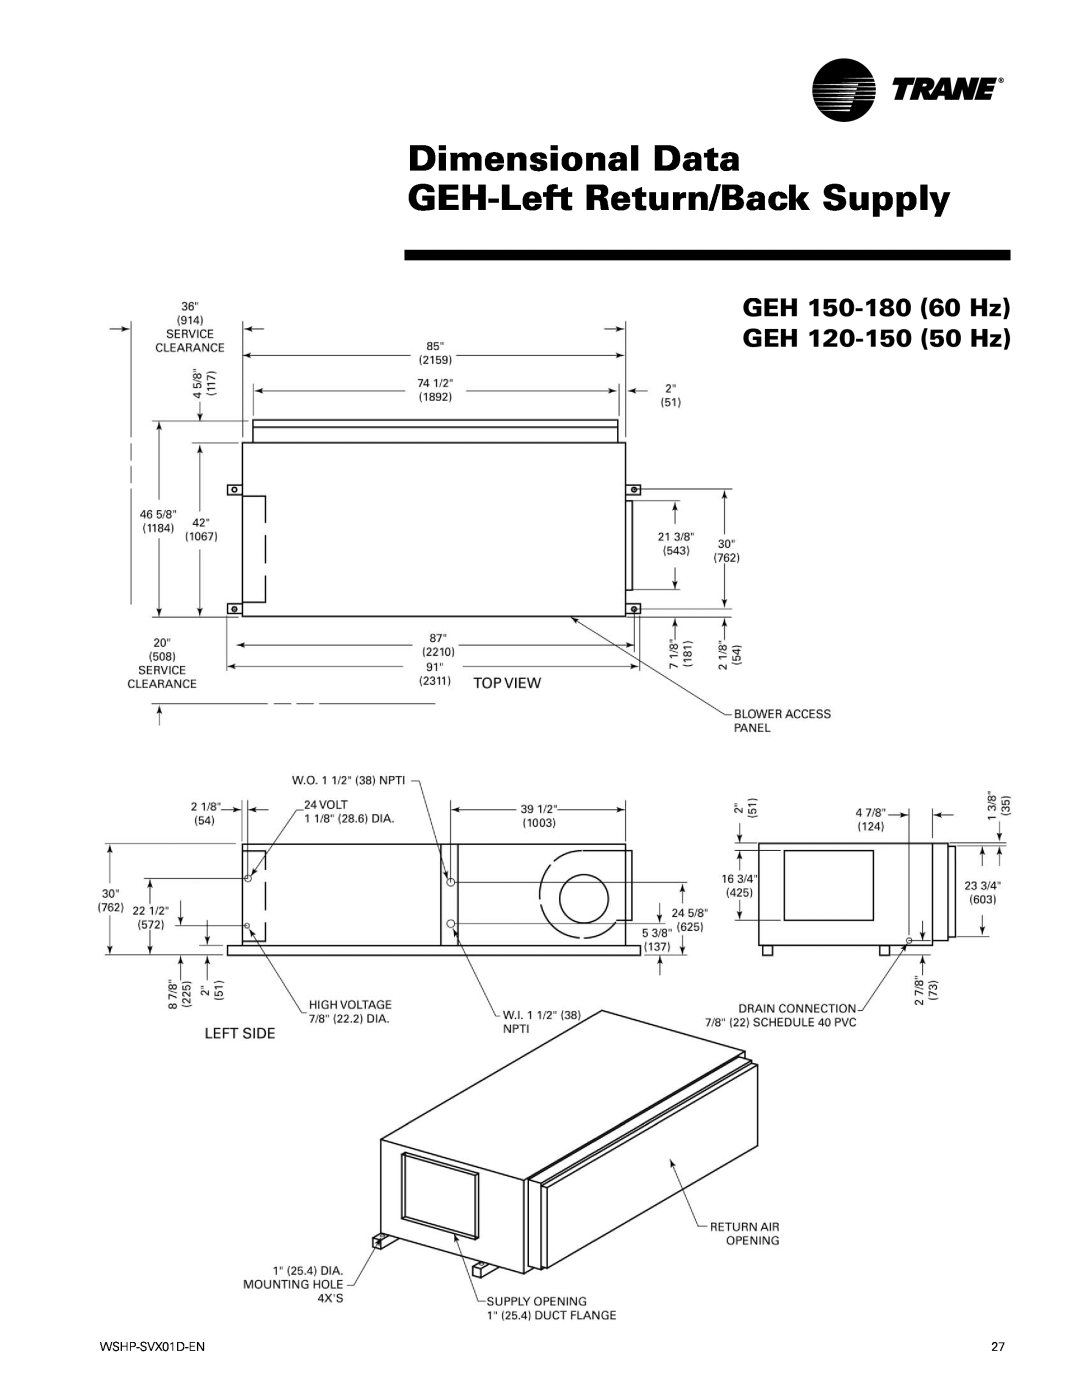 Trane GEV manual Dimensional Data GEH-LeftReturn/Back Supply, GEH 150-18060 Hz GEH 120-15050 Hz 